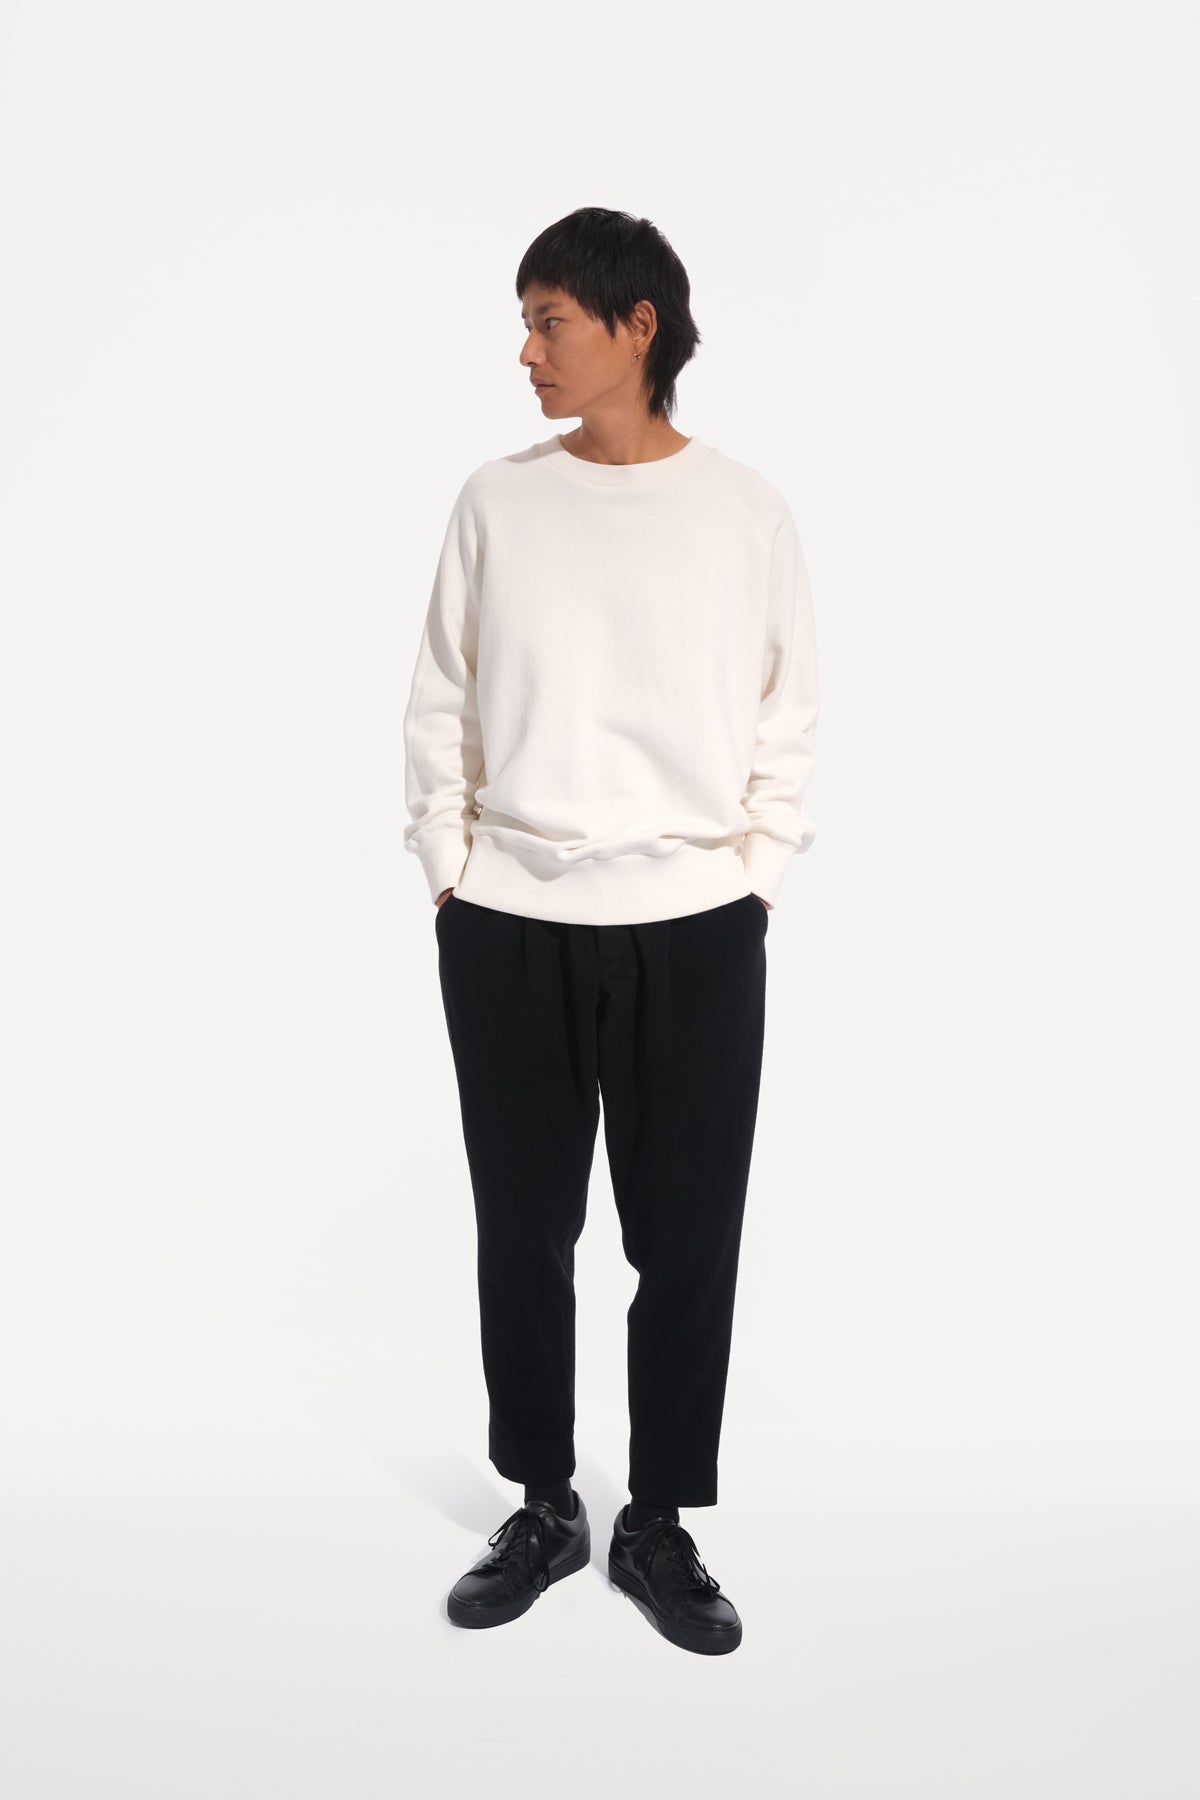 oftt - 02- heavyweight sweatshirt - natural white - organic cotton fleece - image 2